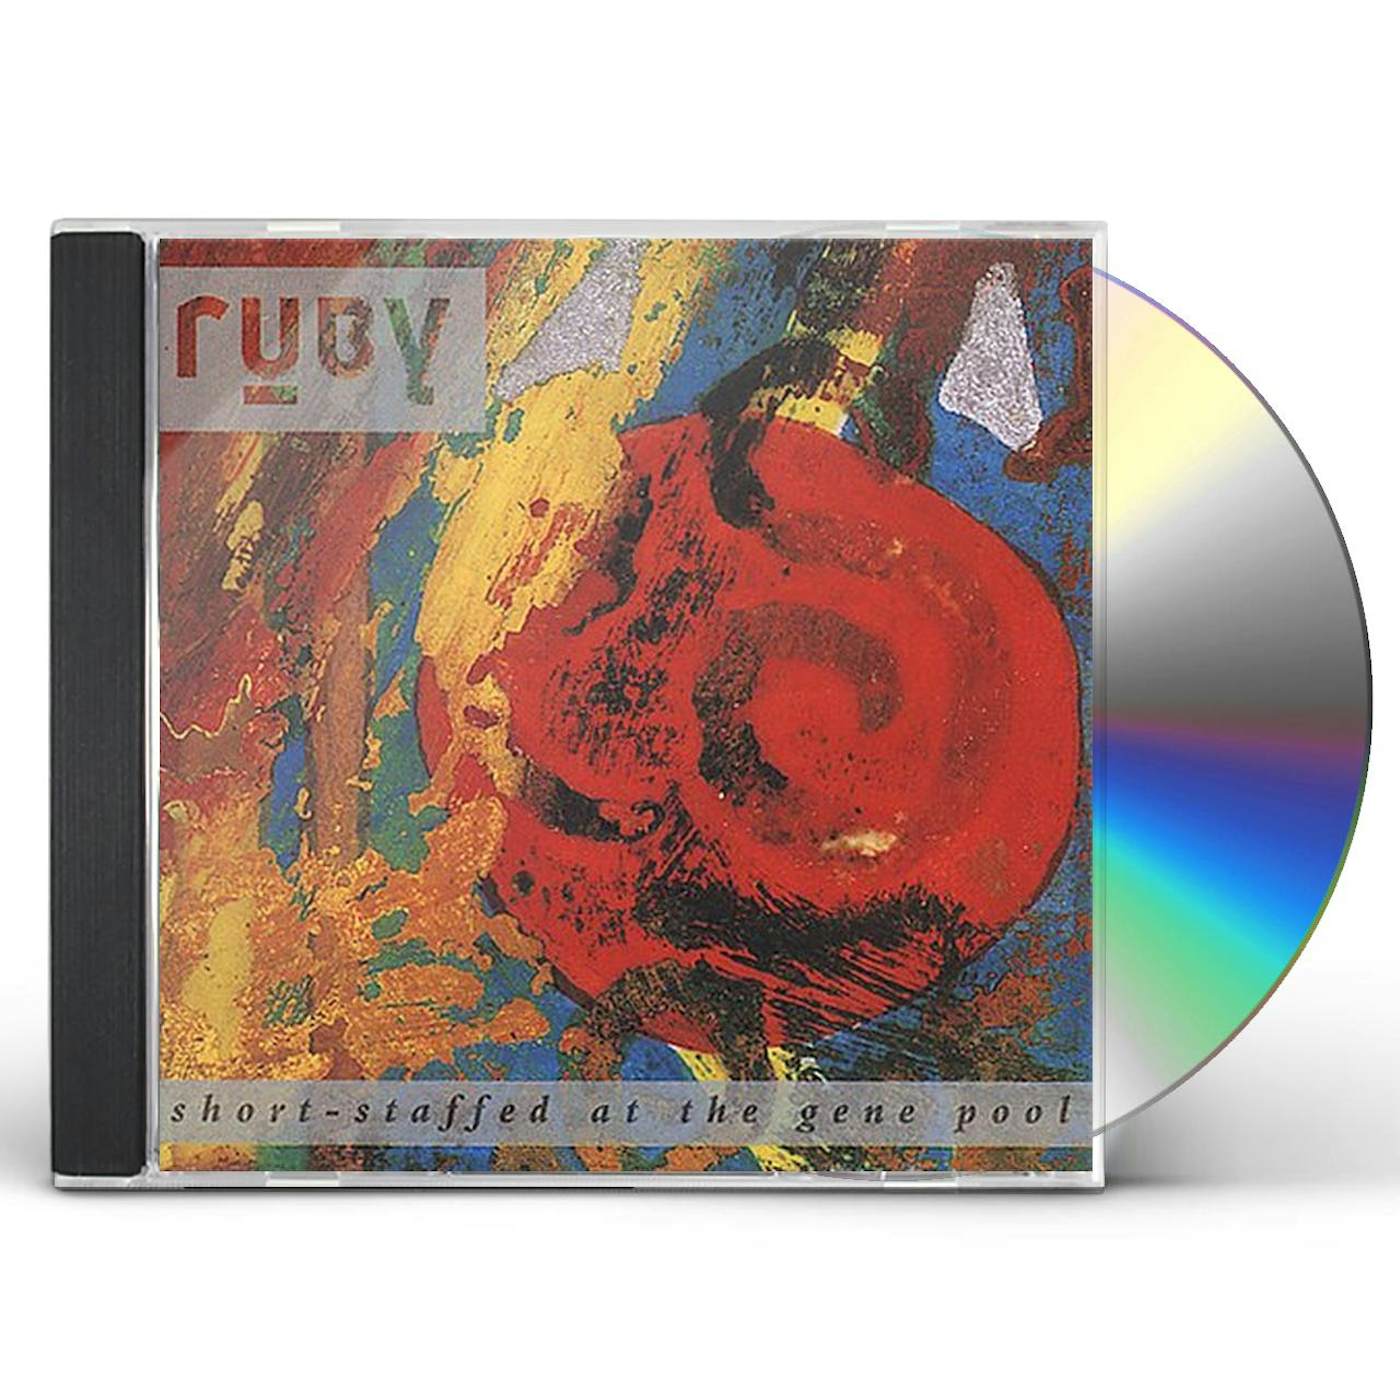 Ruby SHORT STAFFED AT THE GENE POOL CD